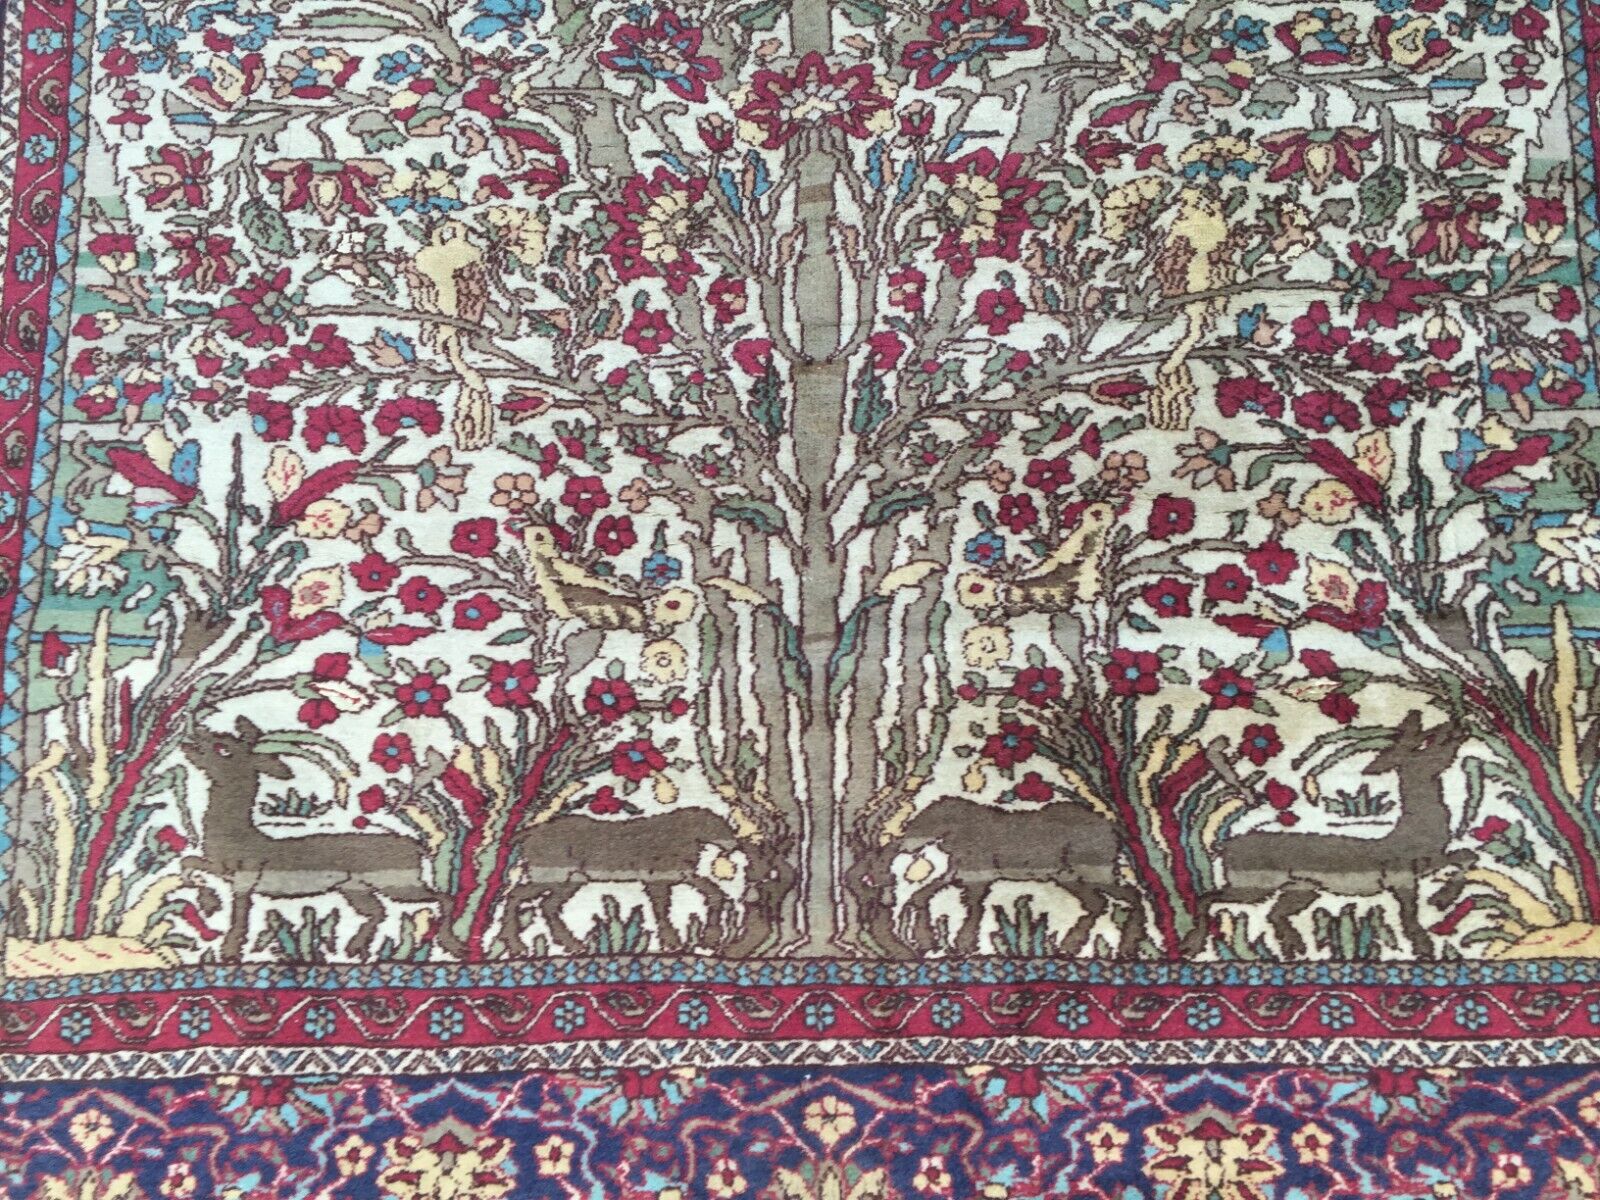 Intricate 'Tree of Life' Motif Adorning Handmade Antique Persian Kerman Rug - 1920s